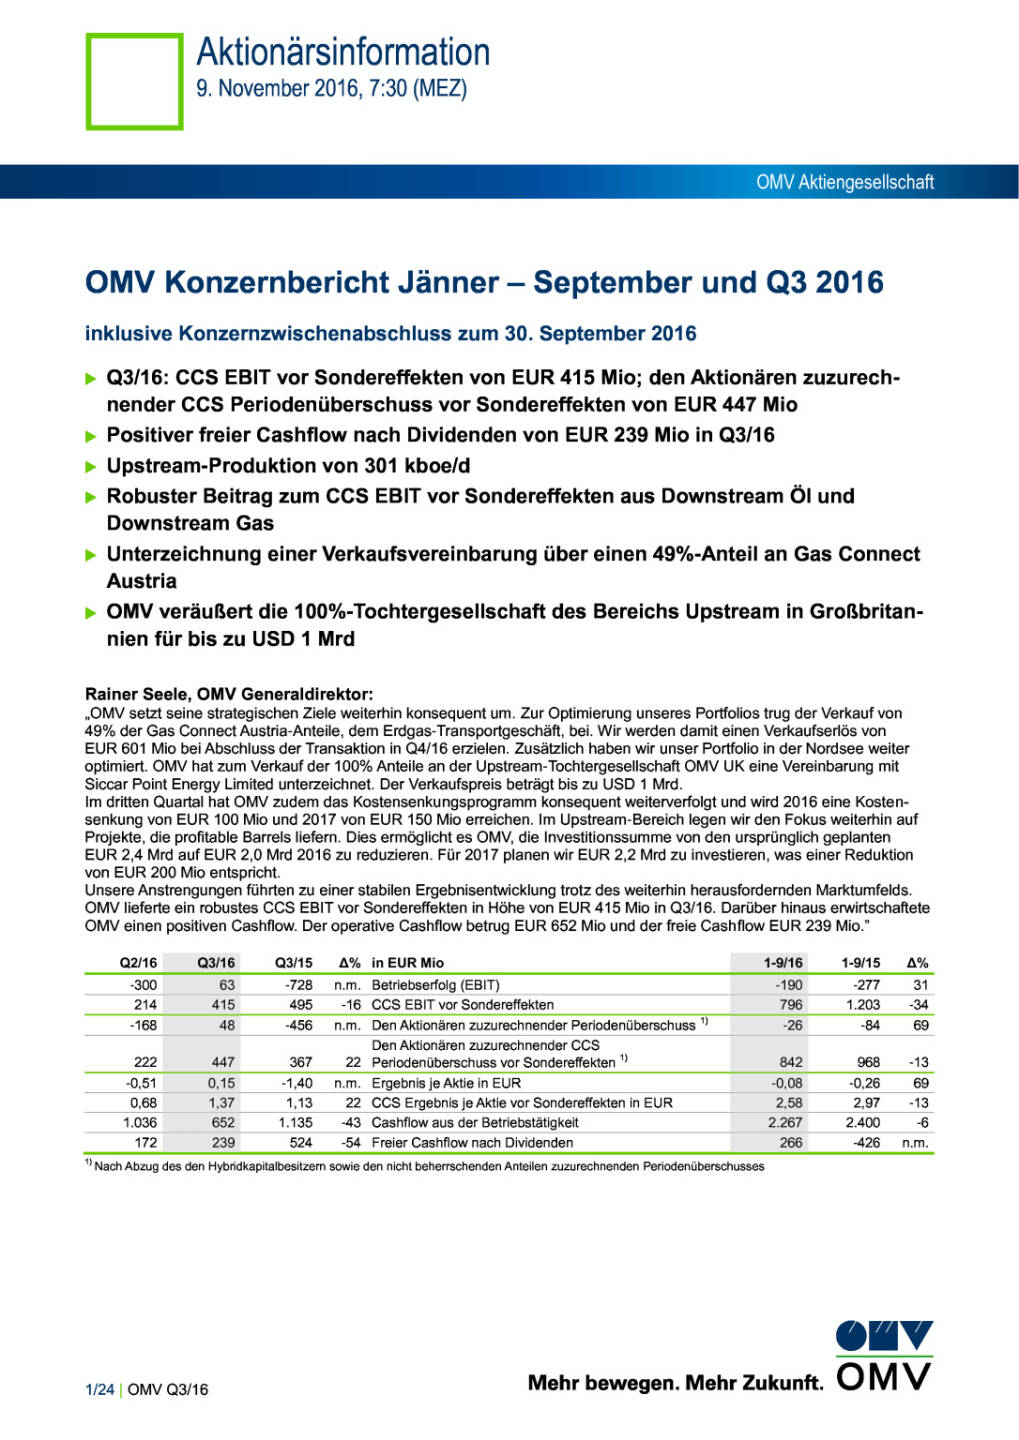 OMV Konzernbericht Jänner – September und Q3 2016, Seite 1/24, komplettes Dokument unter http://boerse-social.com/static/uploads/file_1965_omv_konzernbericht_janner_september_und_q3_2016.pdf